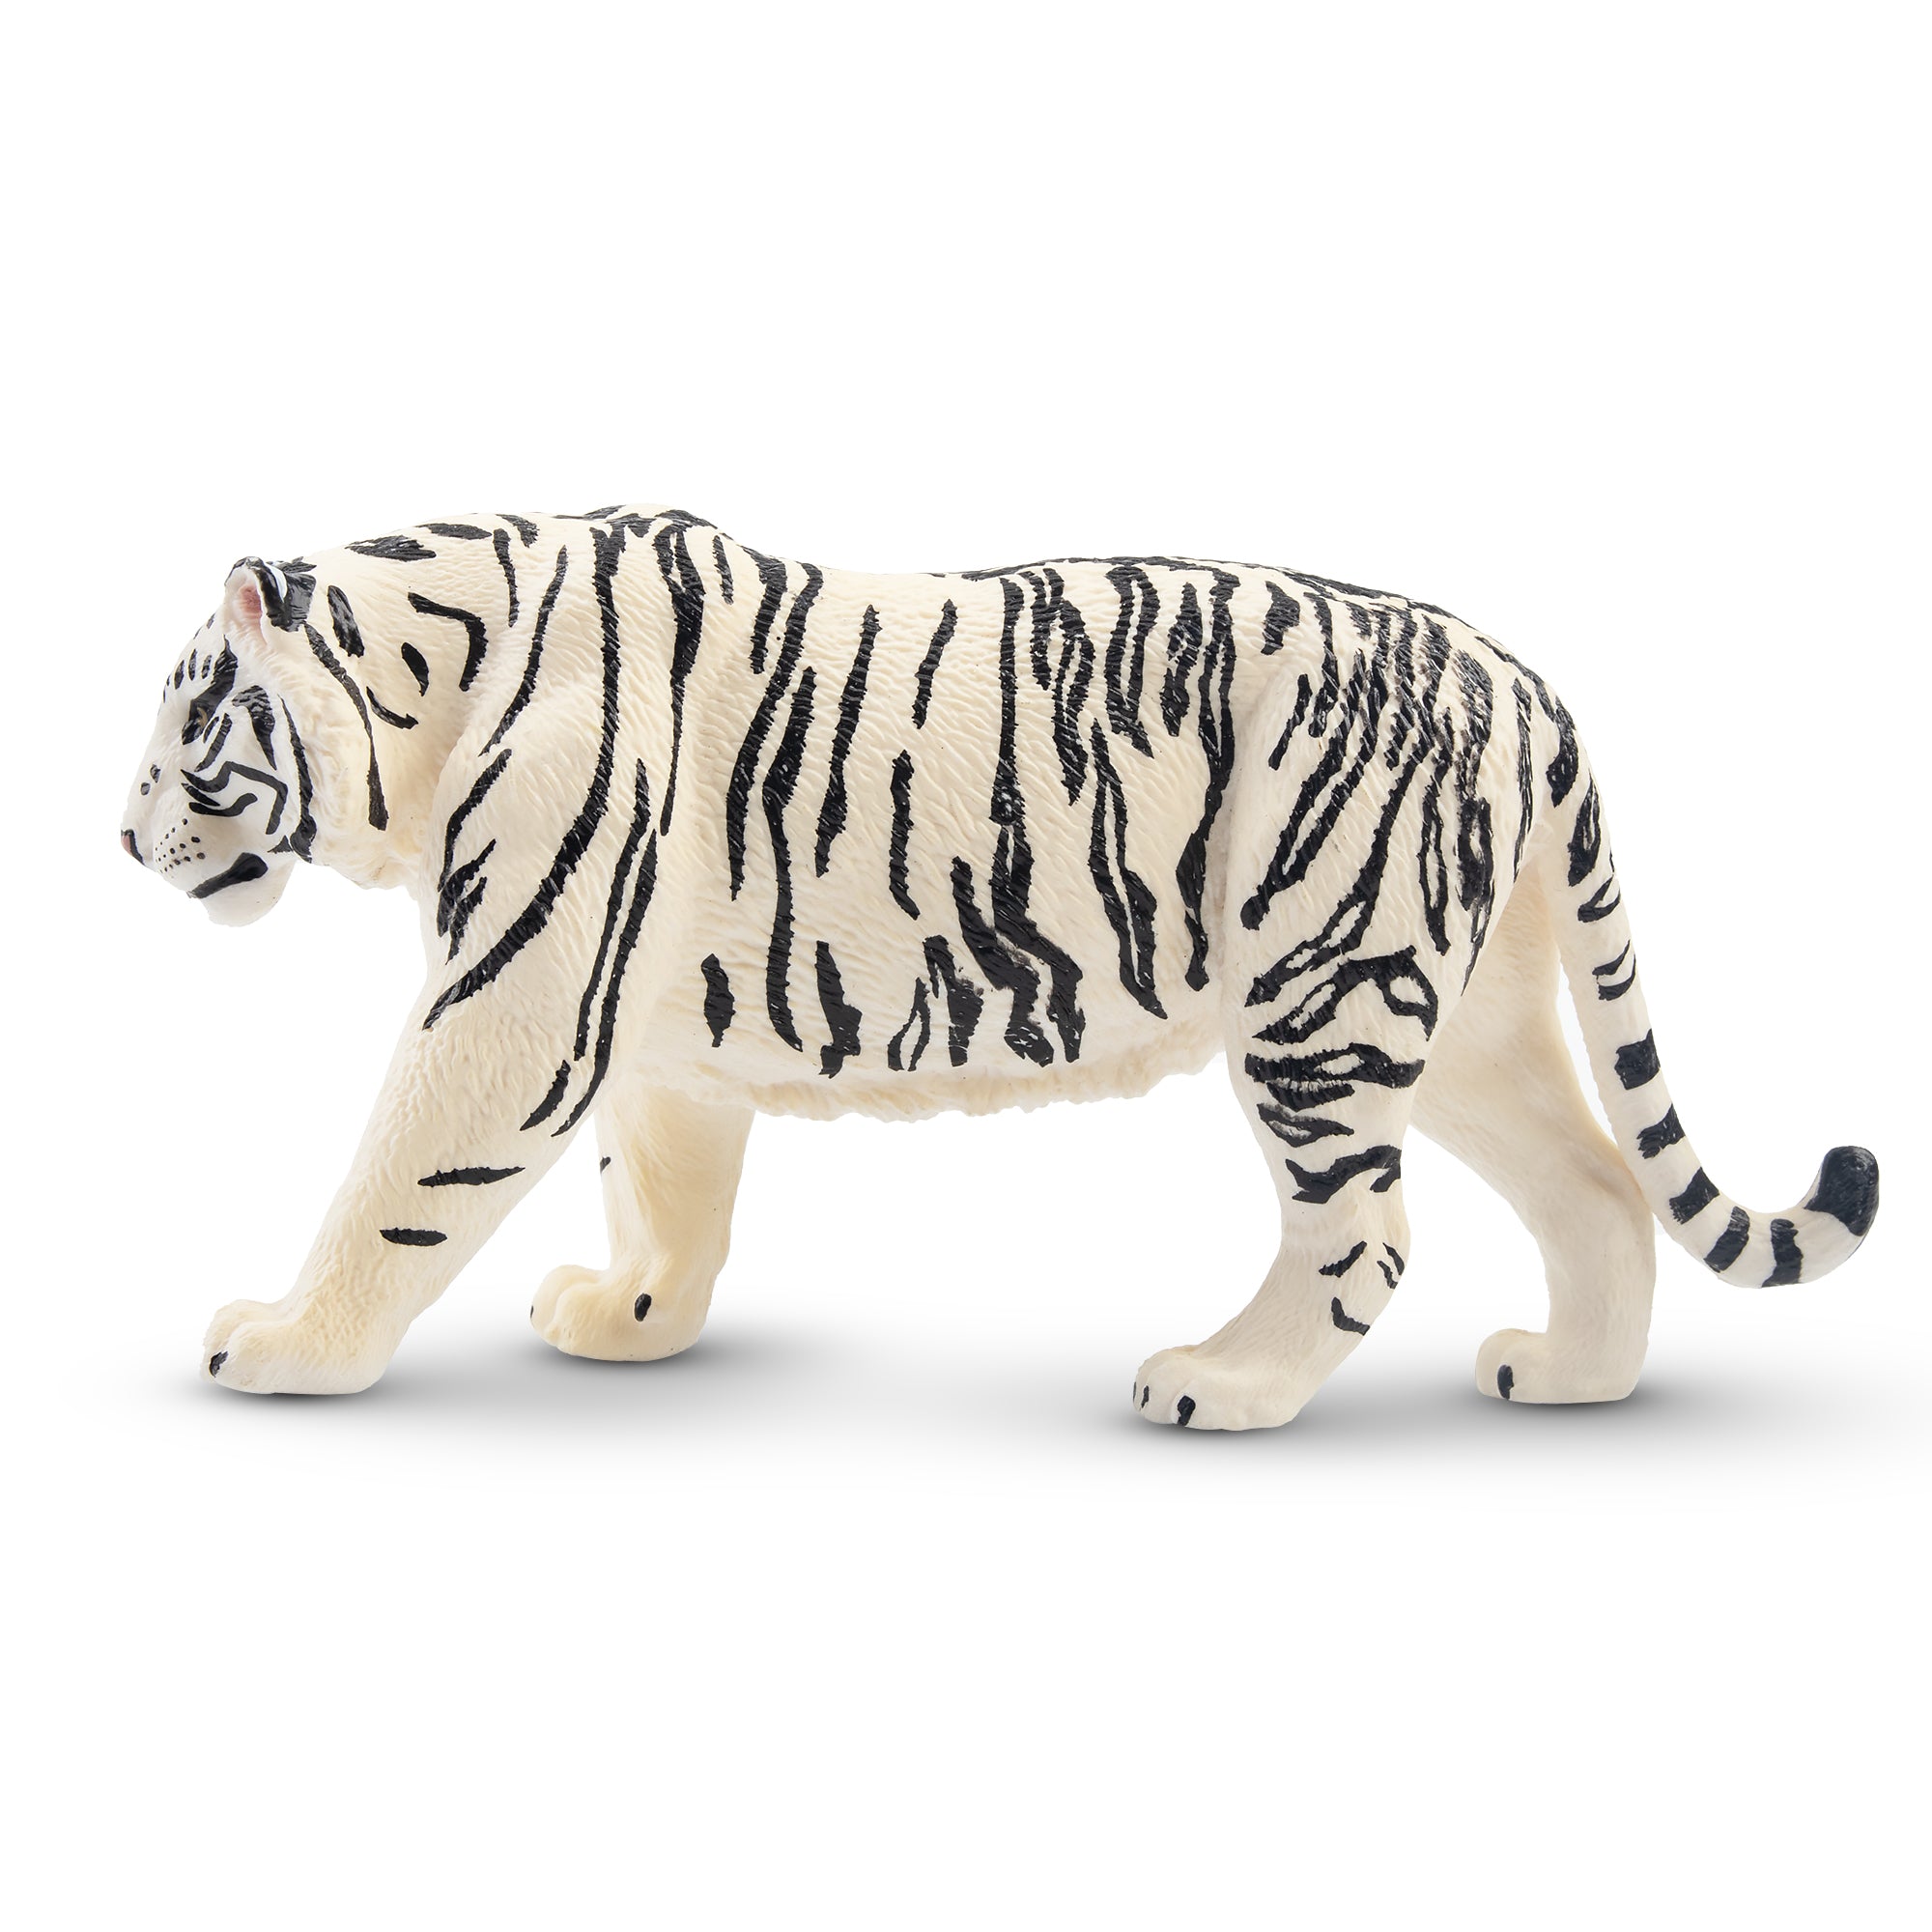 Toymany White Tiger Figurine Toy